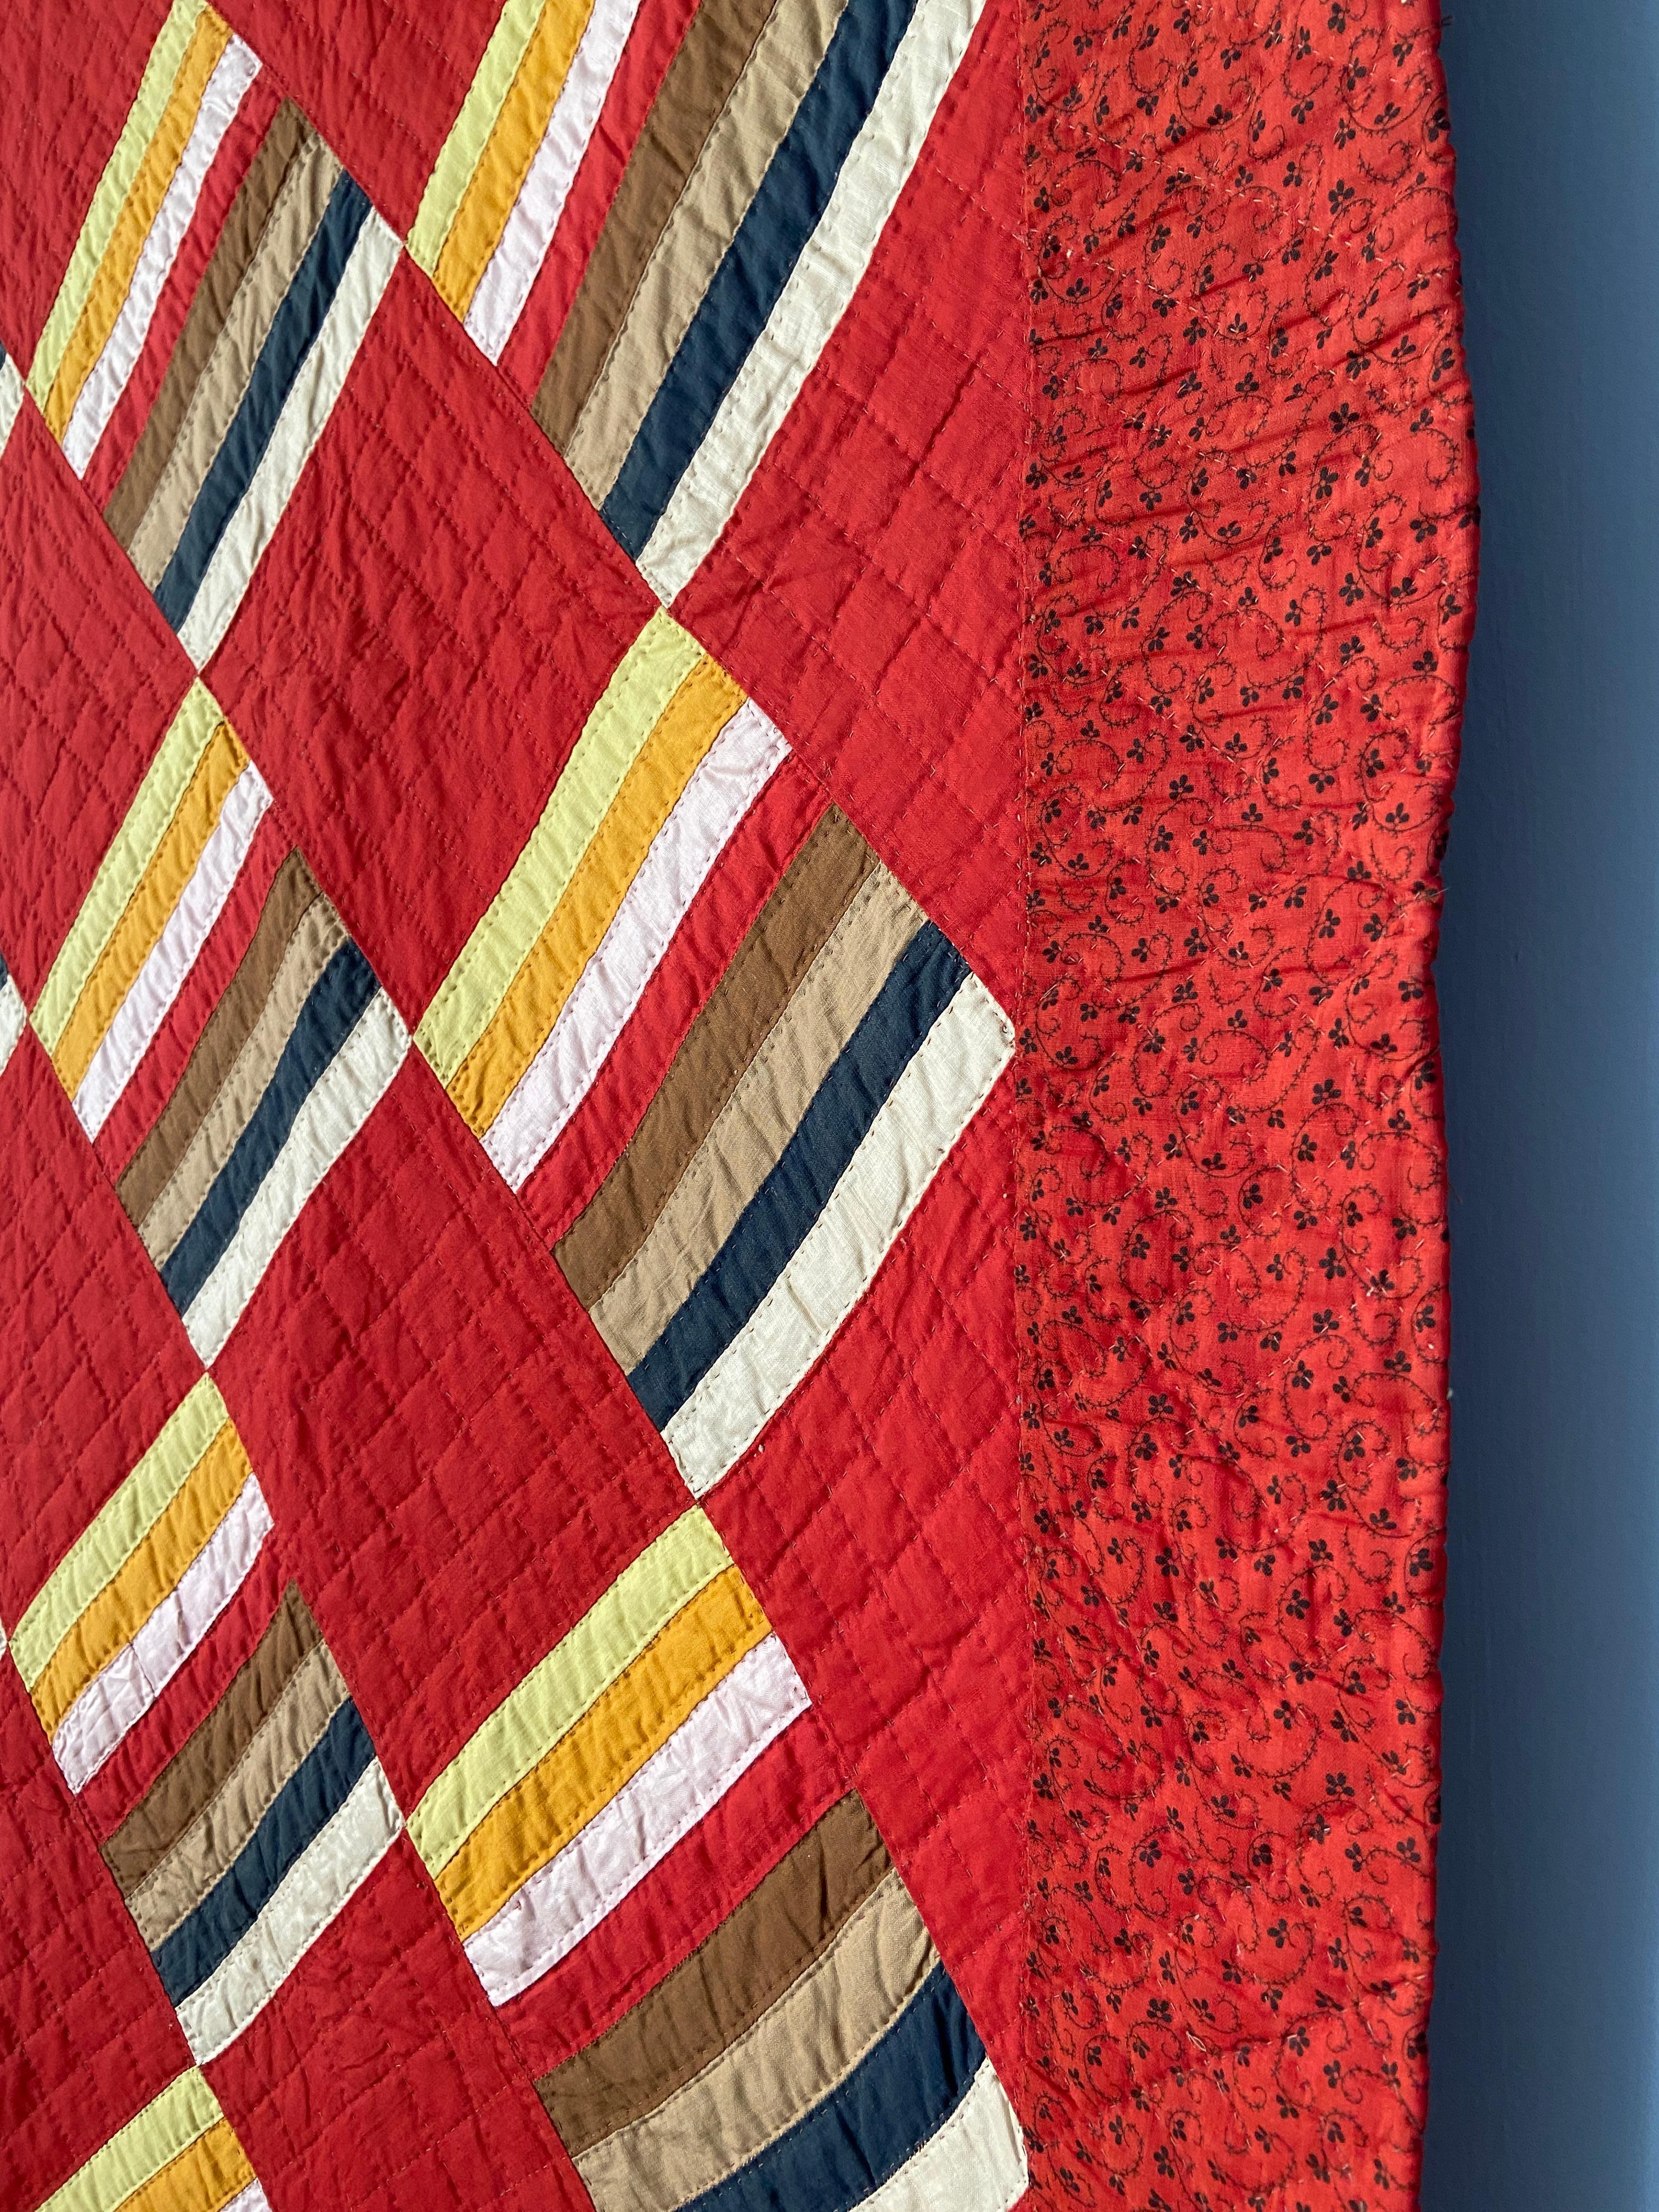 josephs coat quilt pattern